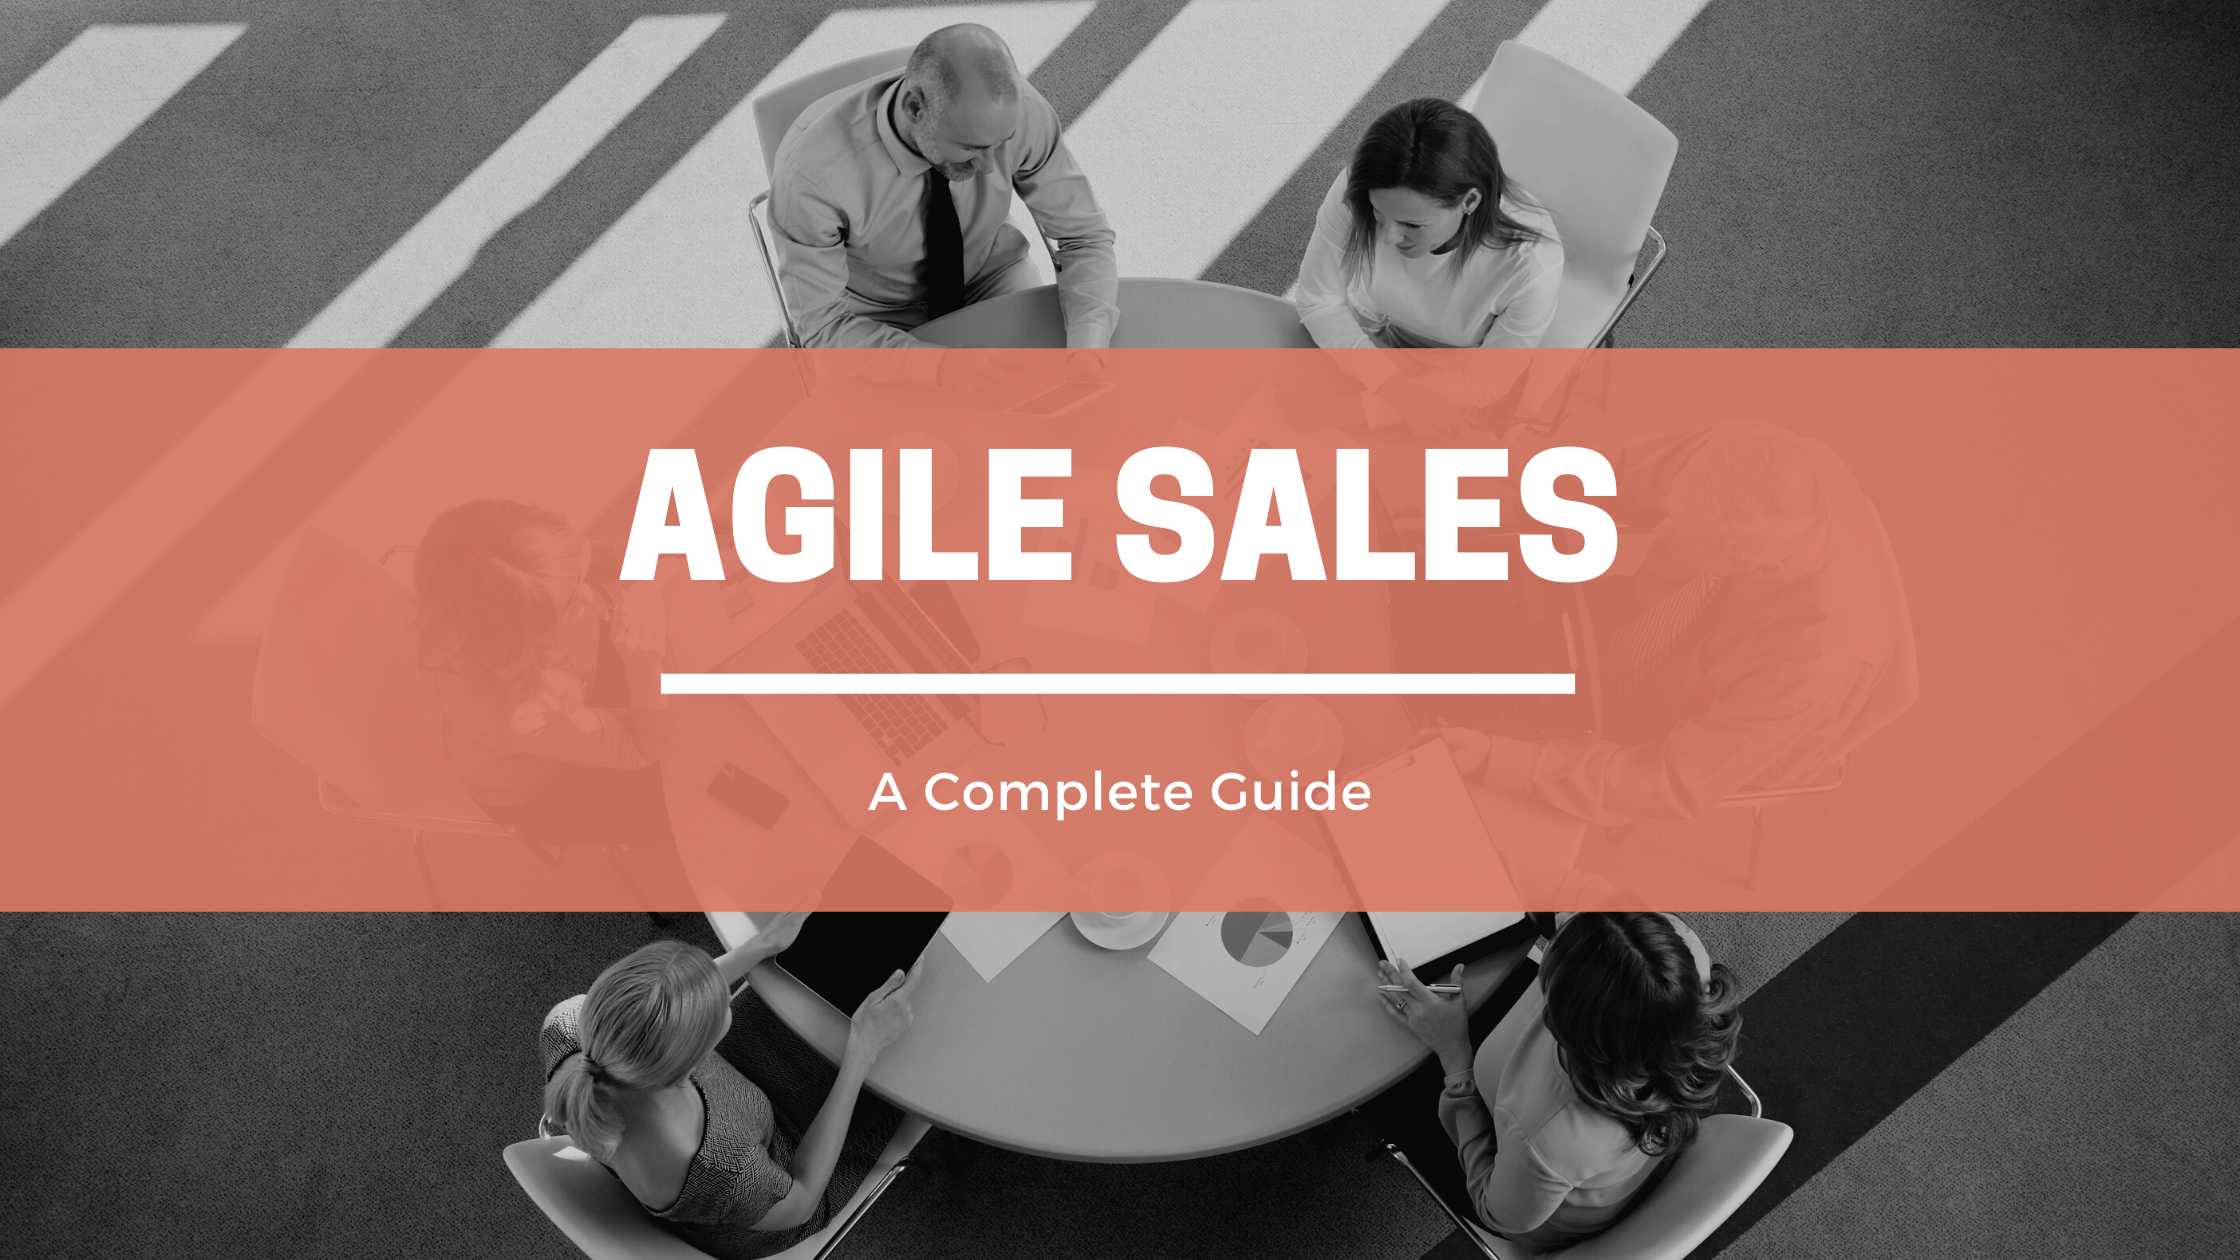 Agile sales header image